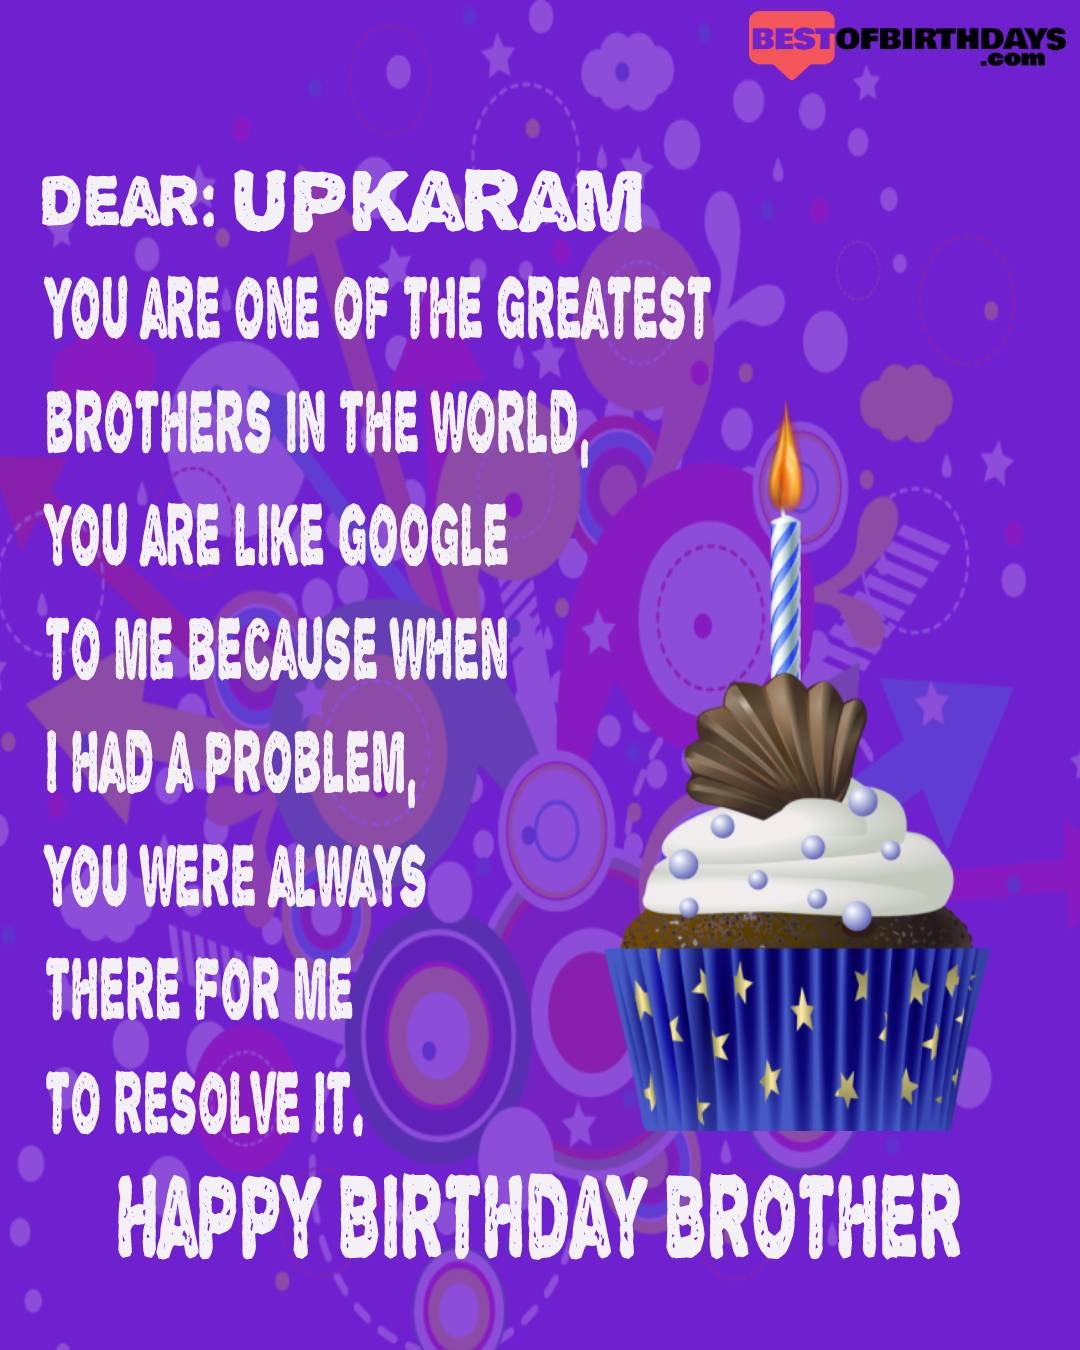 Happy birthday upkaram bhai brother bro